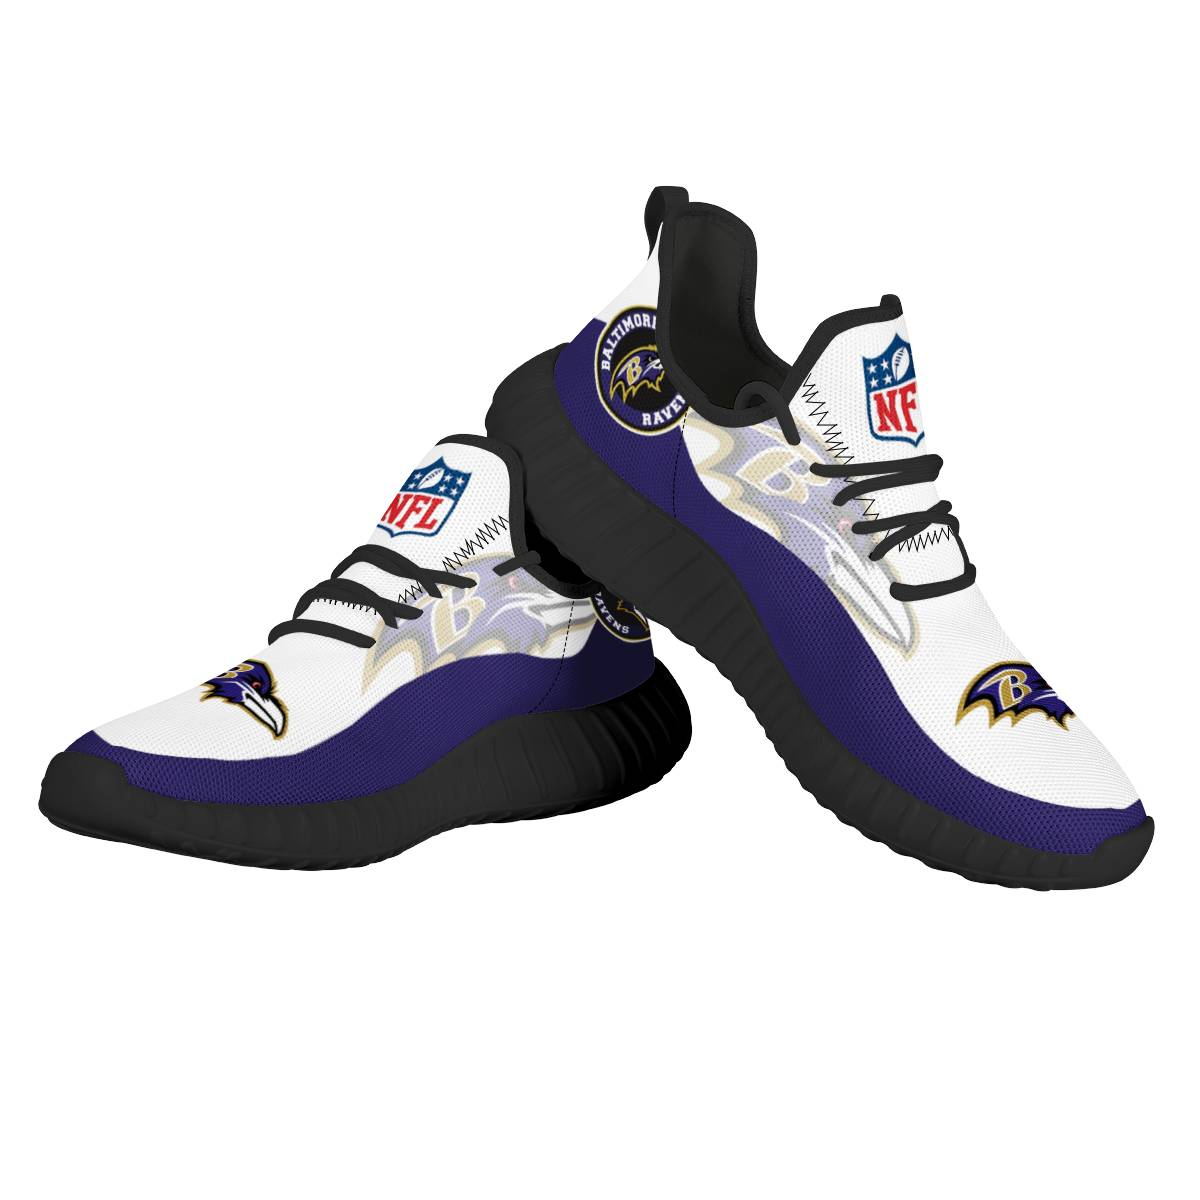 Men's NFL Baltimore Ravens Mesh Knit Sneakers/Shoes 006